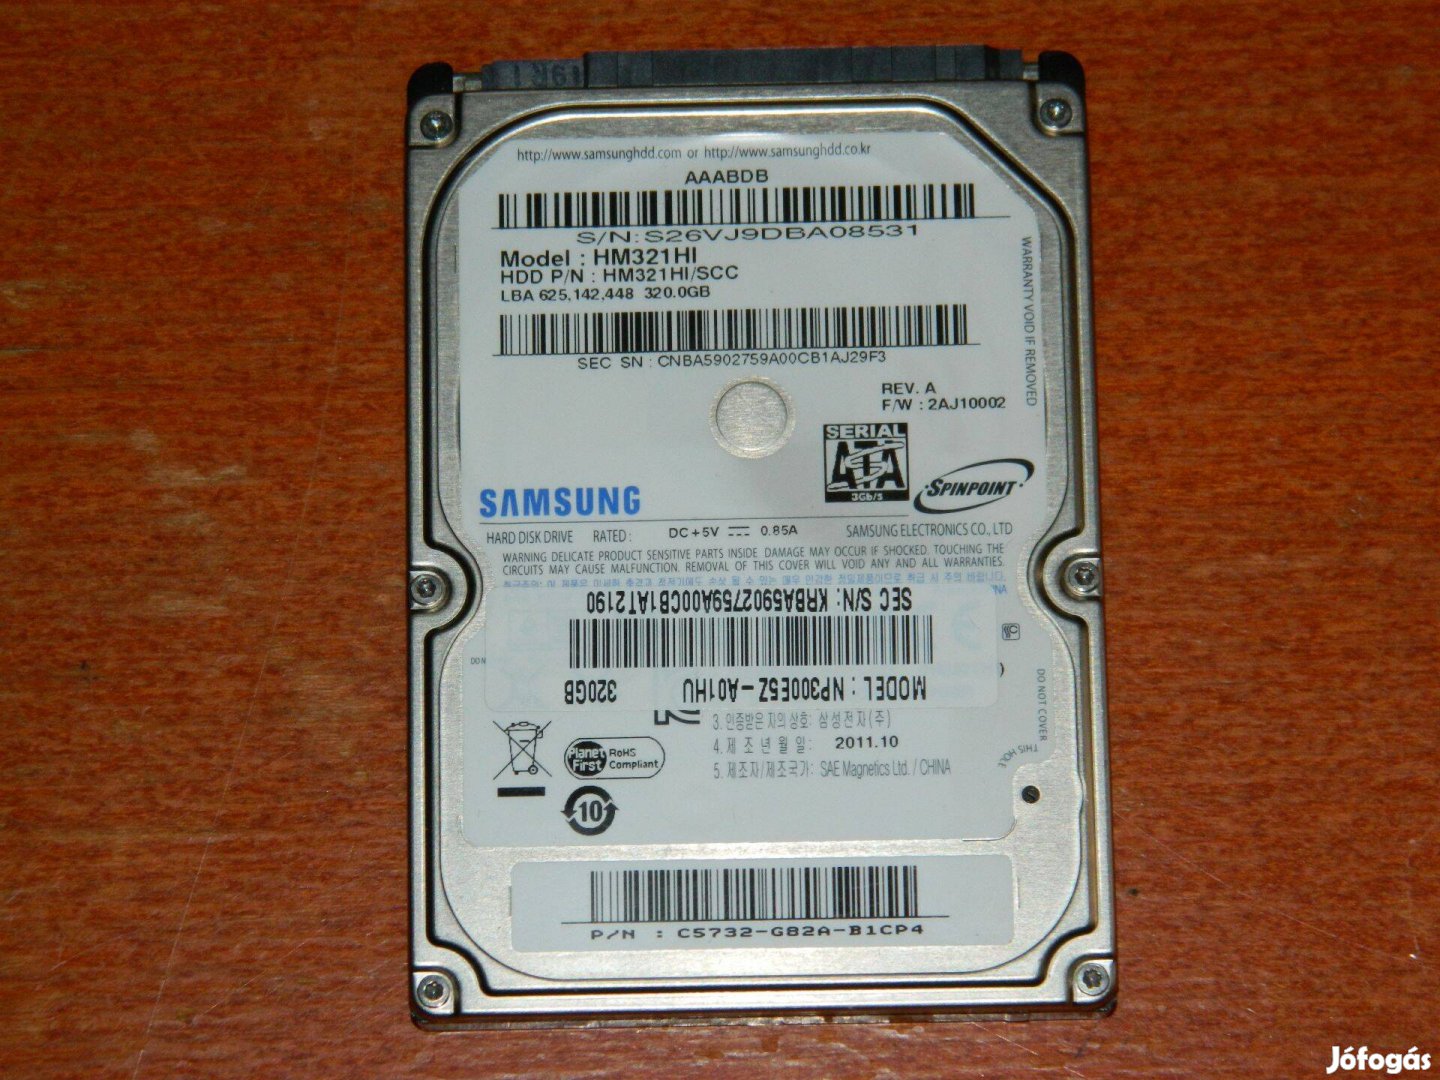 Samsung 320GB Laptop Merevlemez HDD Winchester